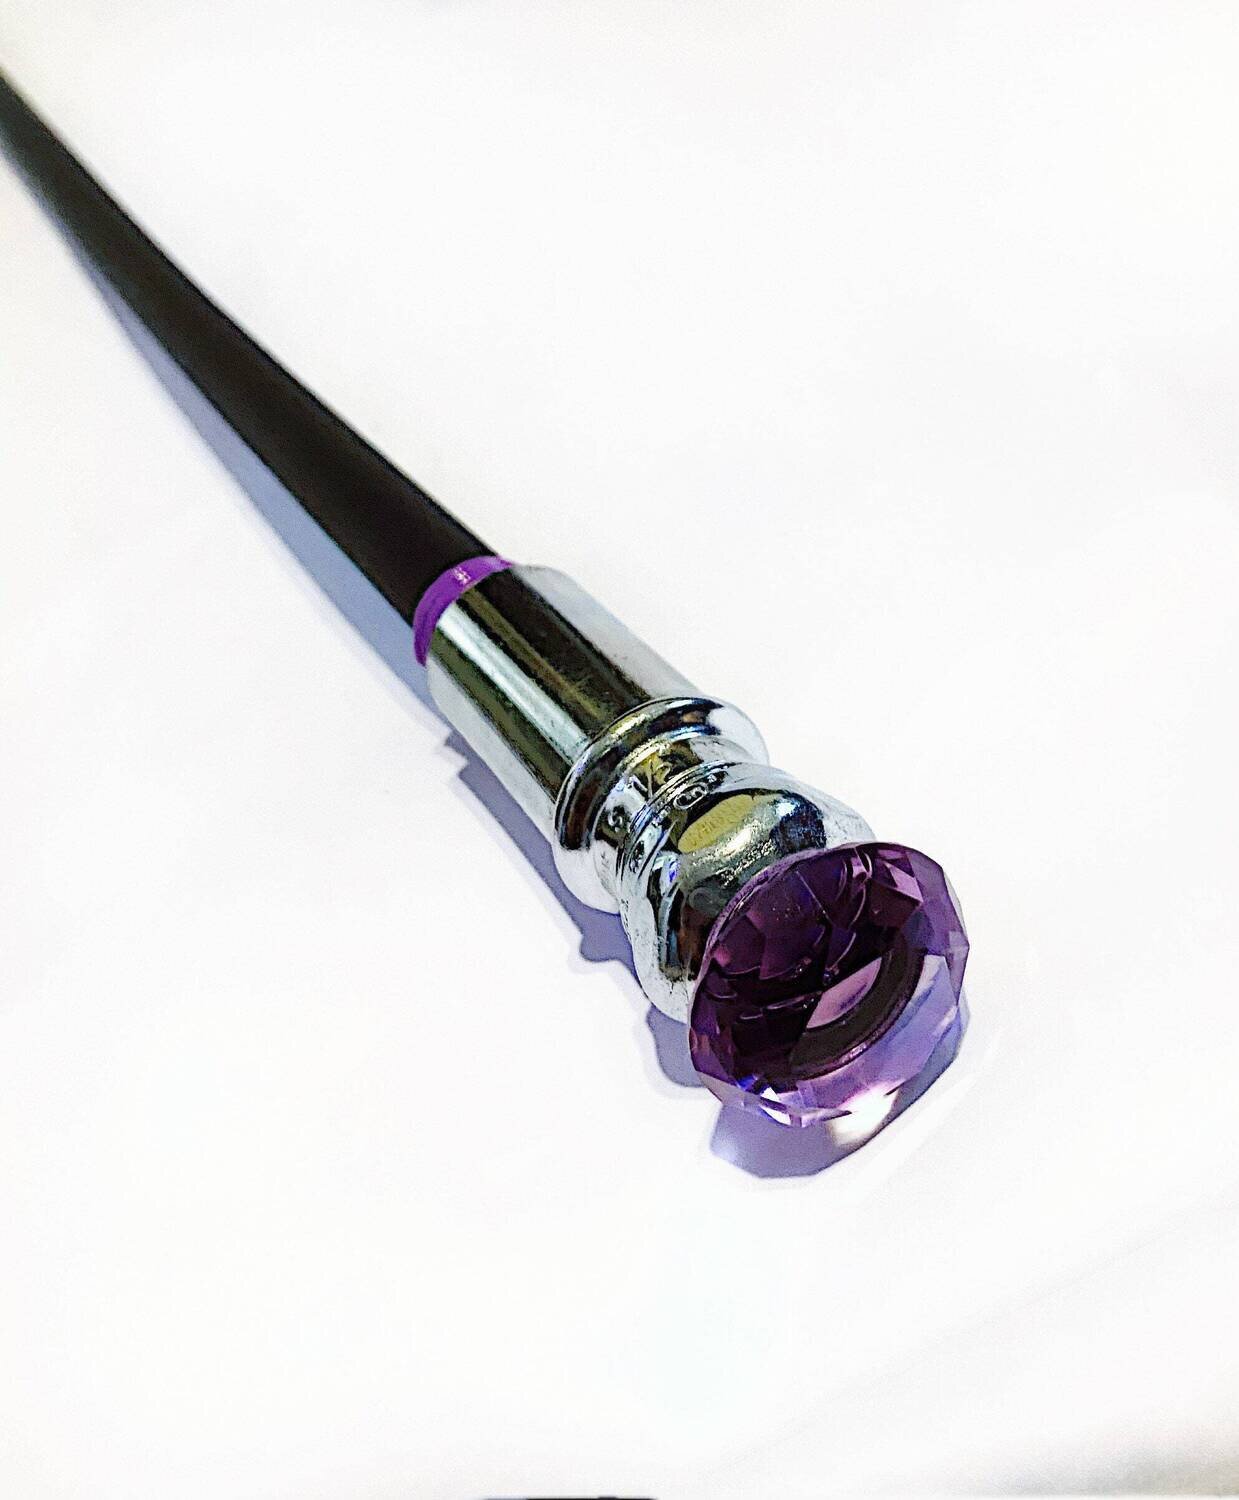 BDSM Flex rubber cane flogger chrome plated purple gem handle spanking bdsm gear Flogger